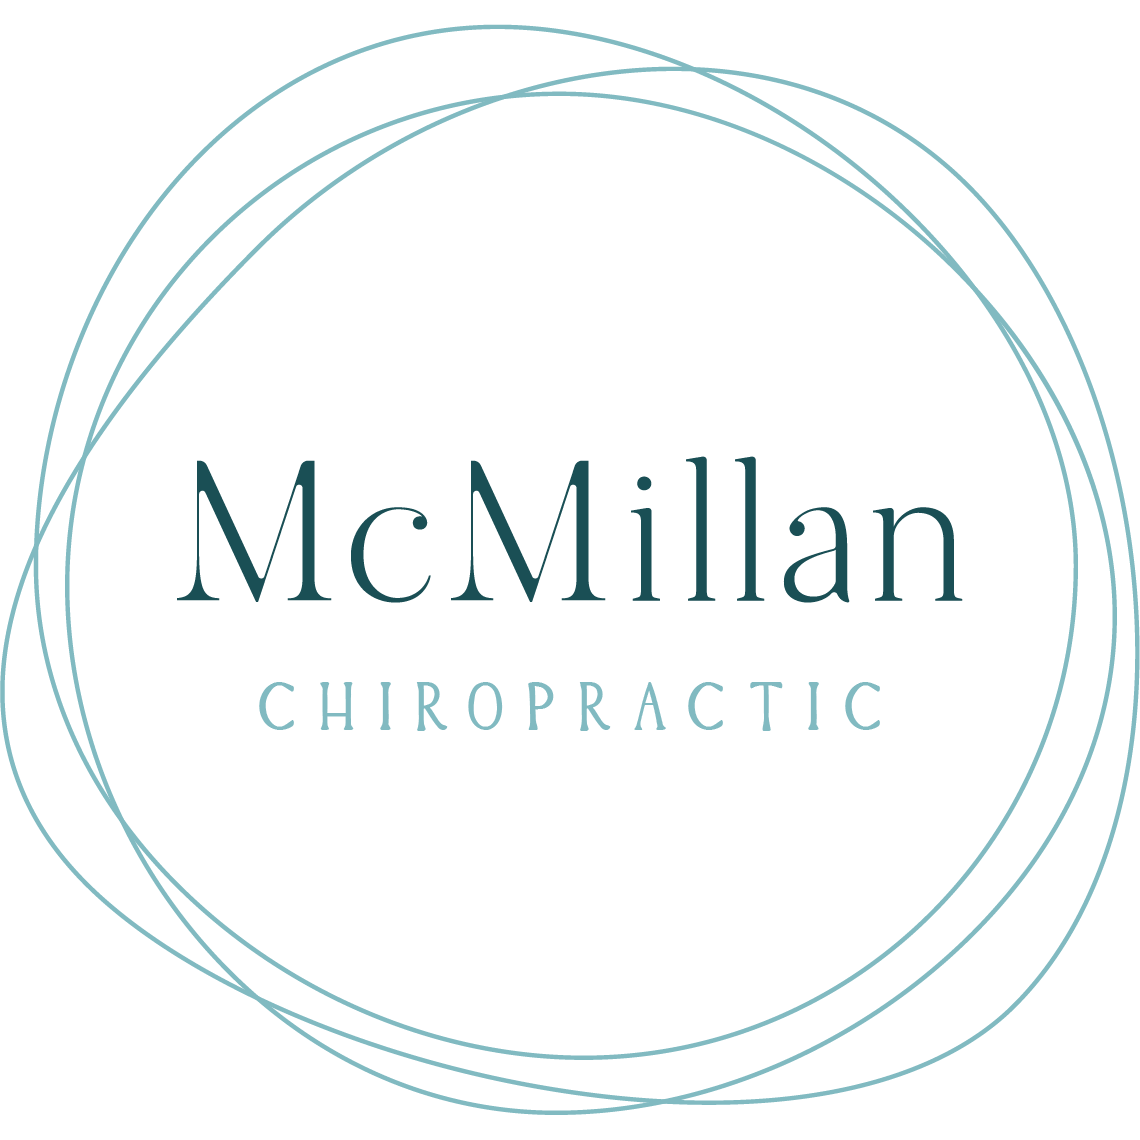 McMillan Chiropractic Centre Traralgon (03) 5174 9033